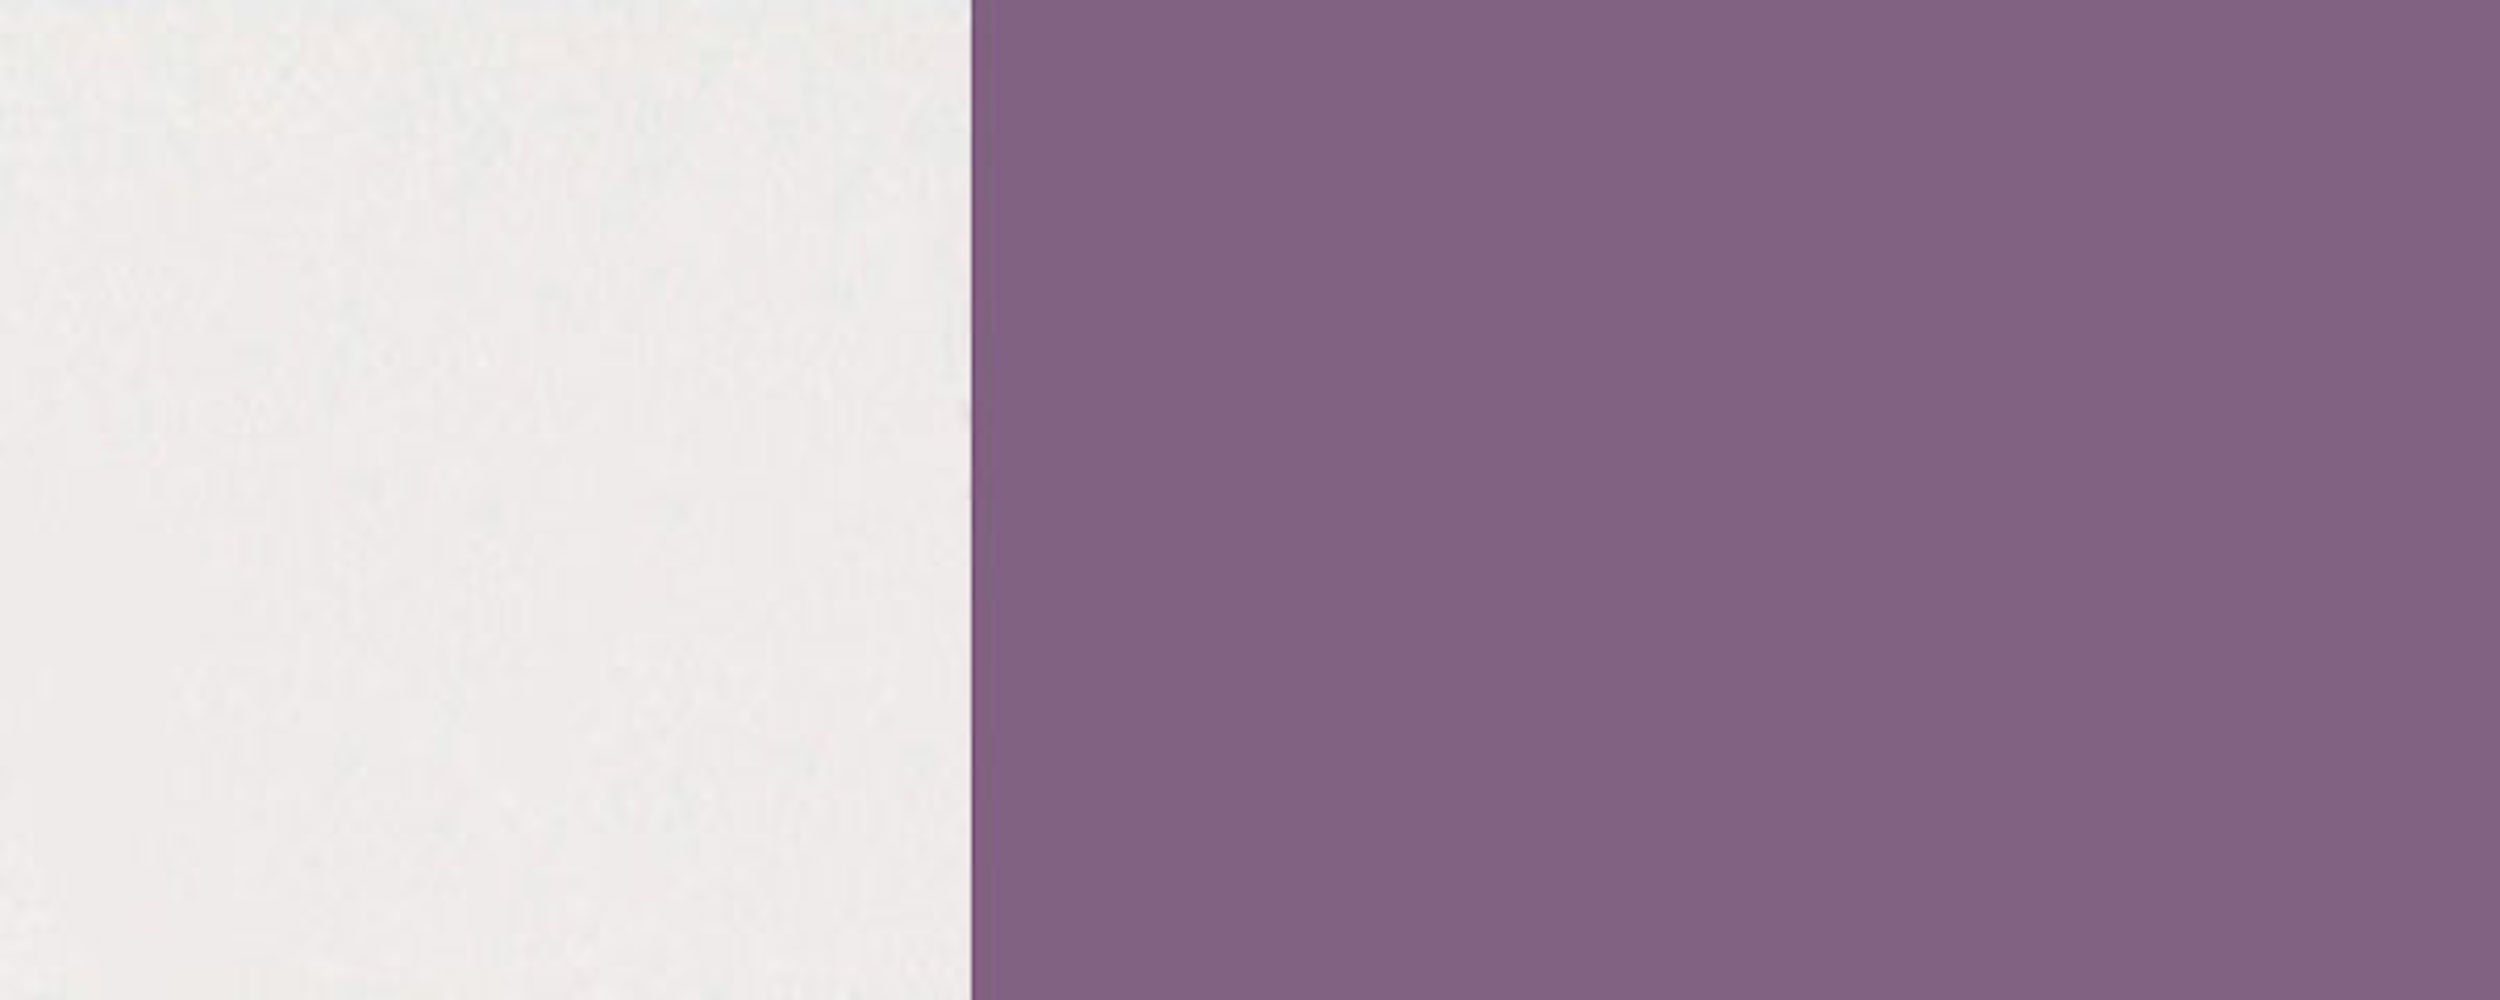 Feldmann-Wohnen Klapphängeschrank Tivoli rotlila Front- Korpusfarbe (Tivoli) 4001 50cm (glasklar) wählbar Glasfront matt mit und 1-türig RAL